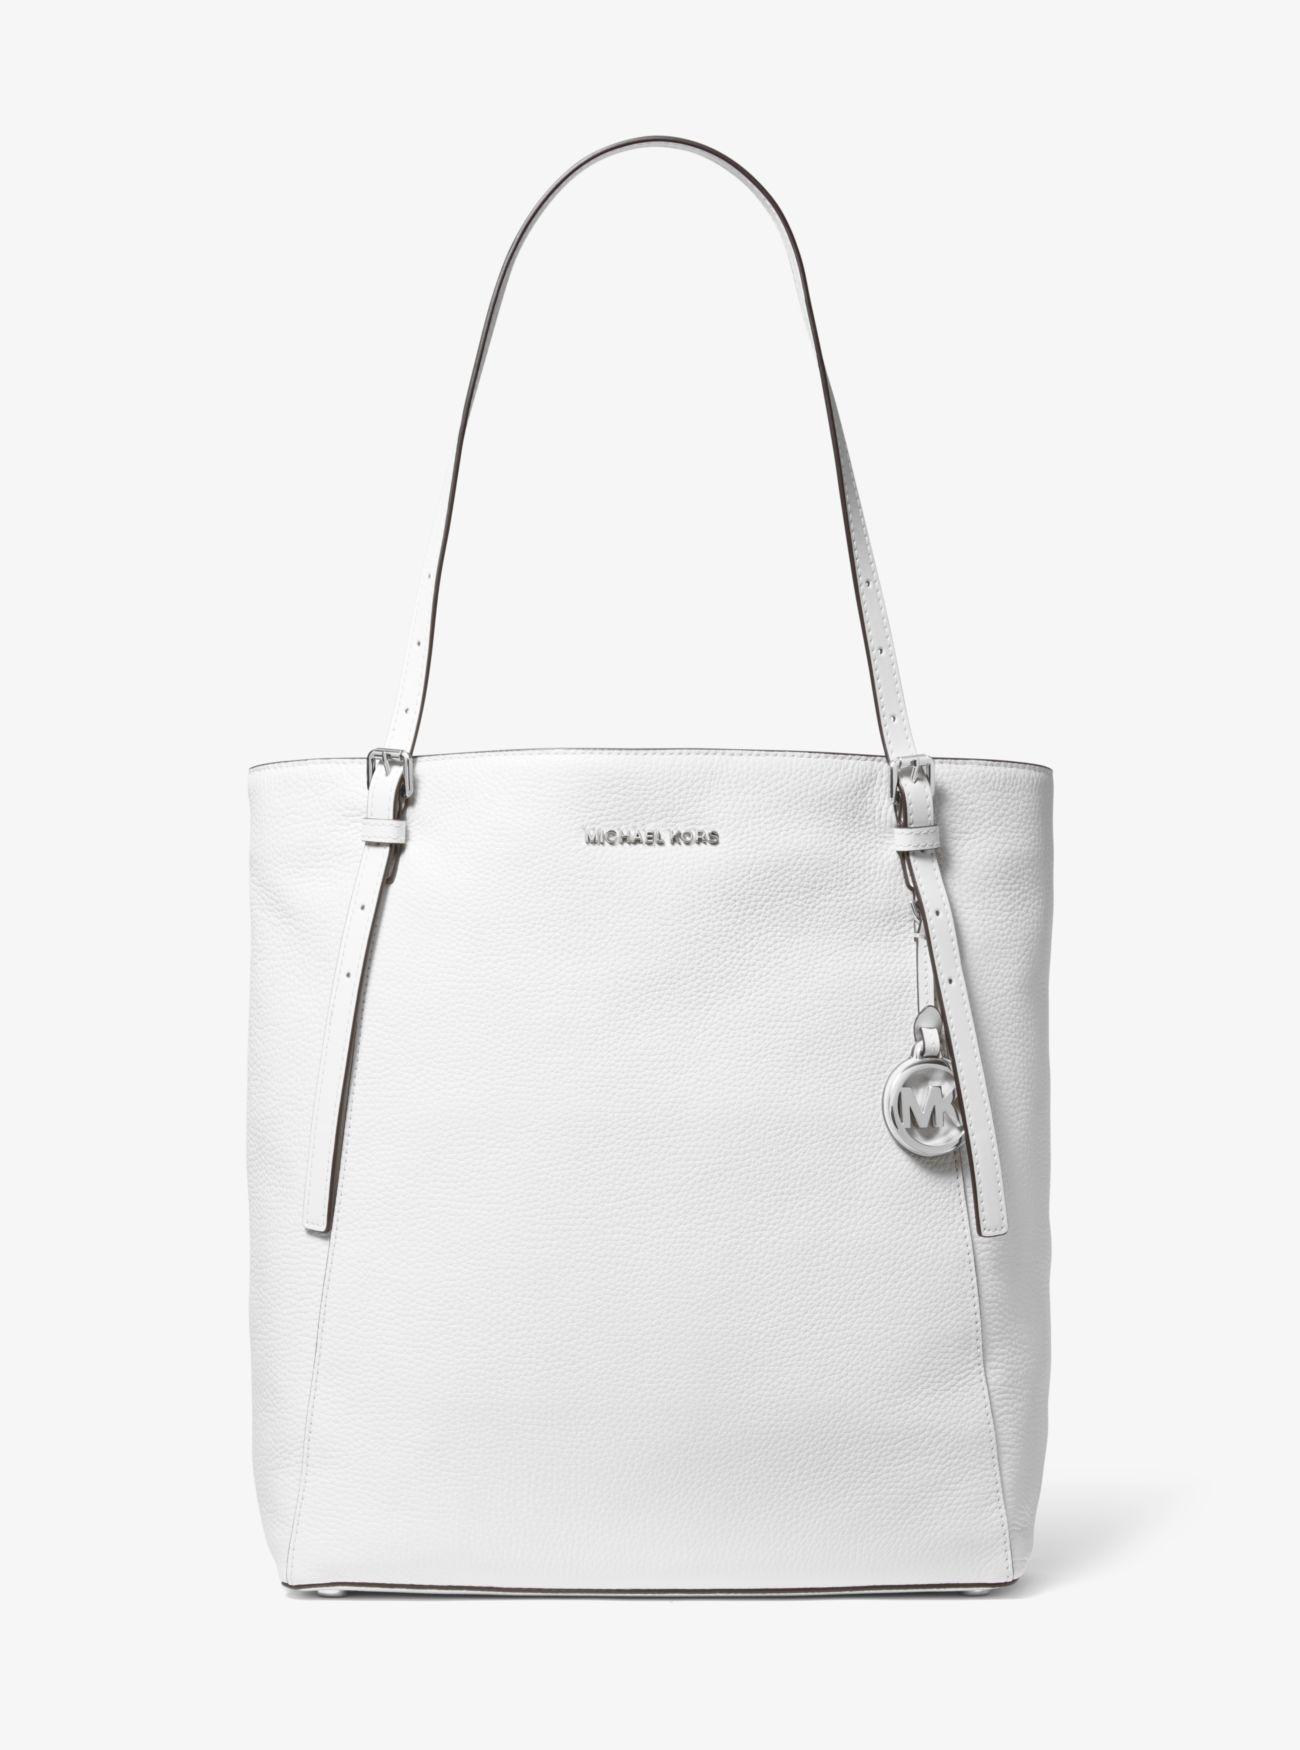 MK white leather bag